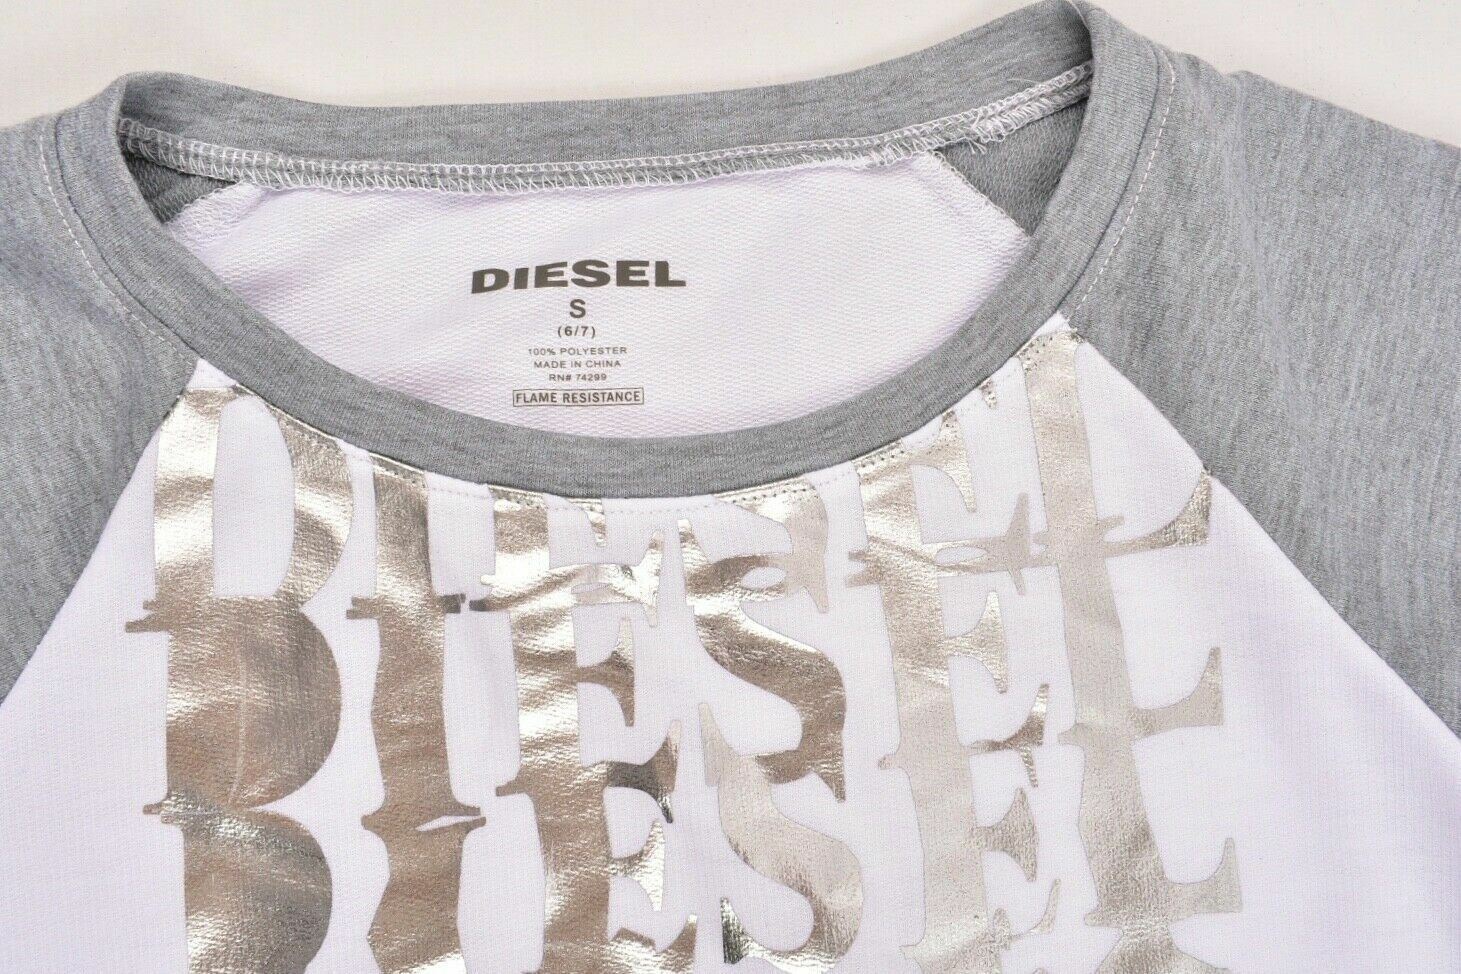 DIESEL Sleepwear Girl's Short Nightdress, White/Grey, size 6 years to 7 years